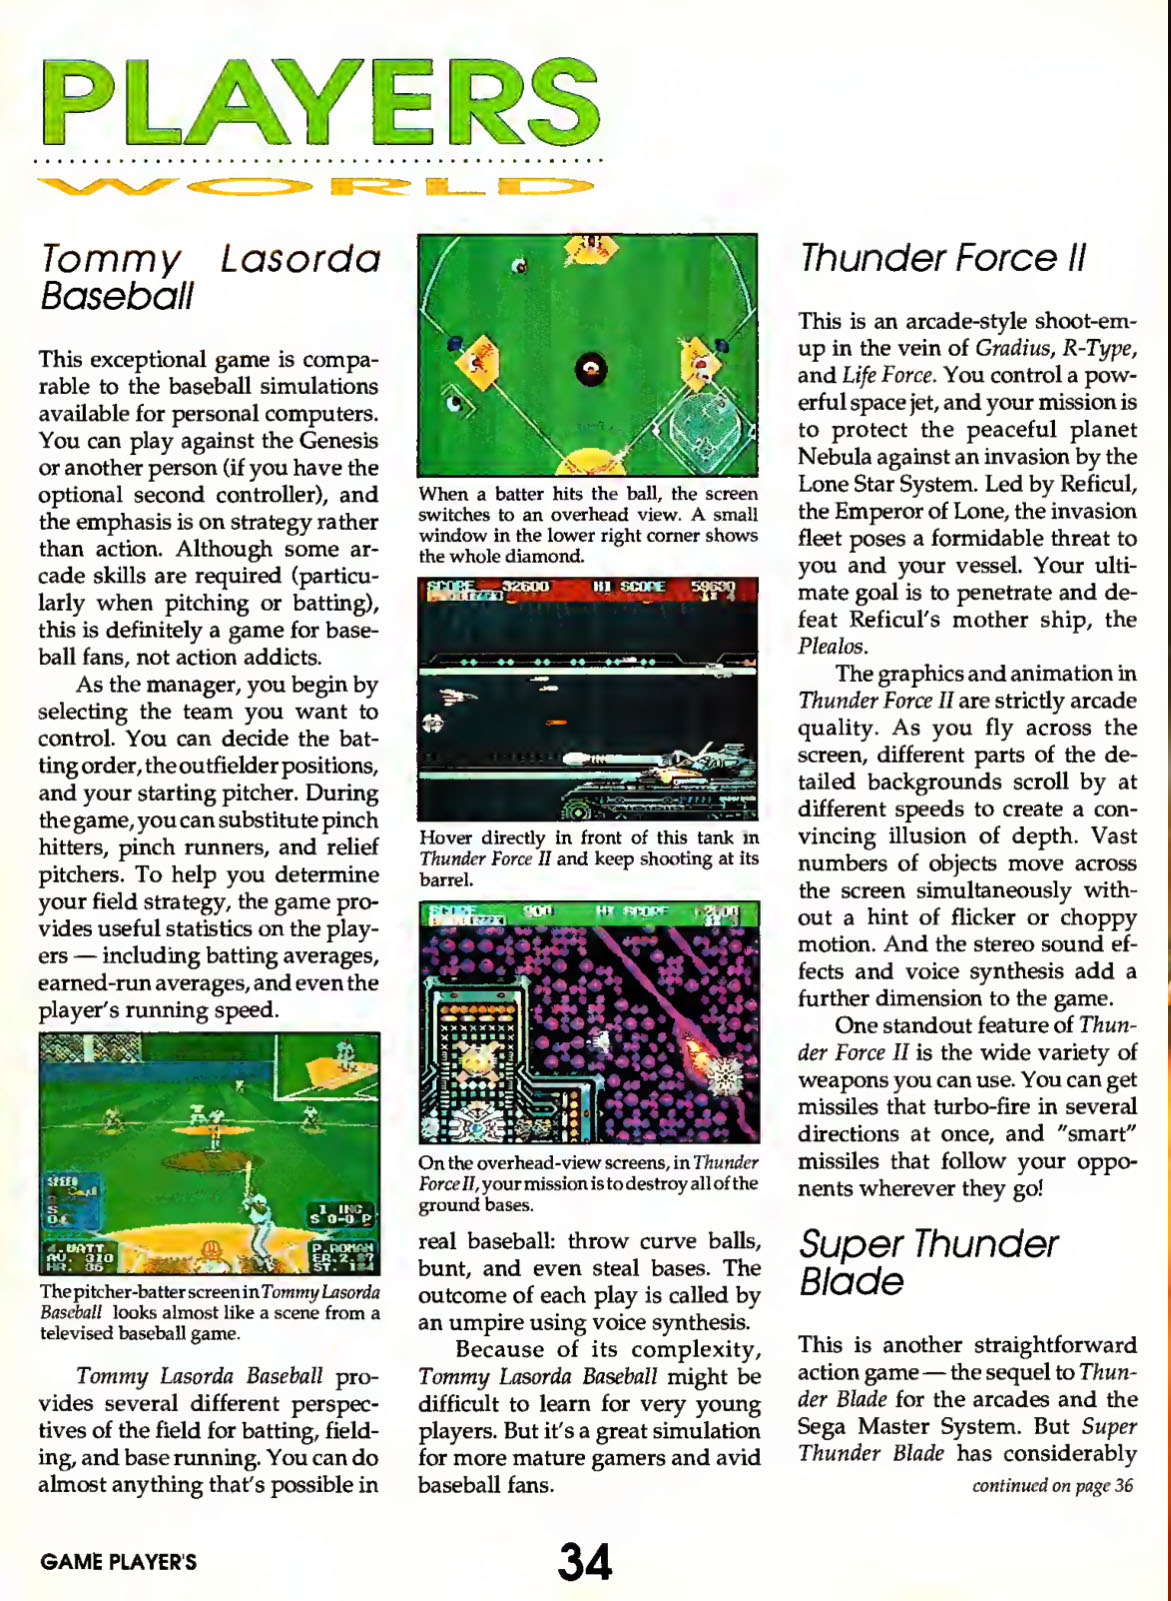 Tommy Lasorda Baseball Review, Game Players November 1989 page 34